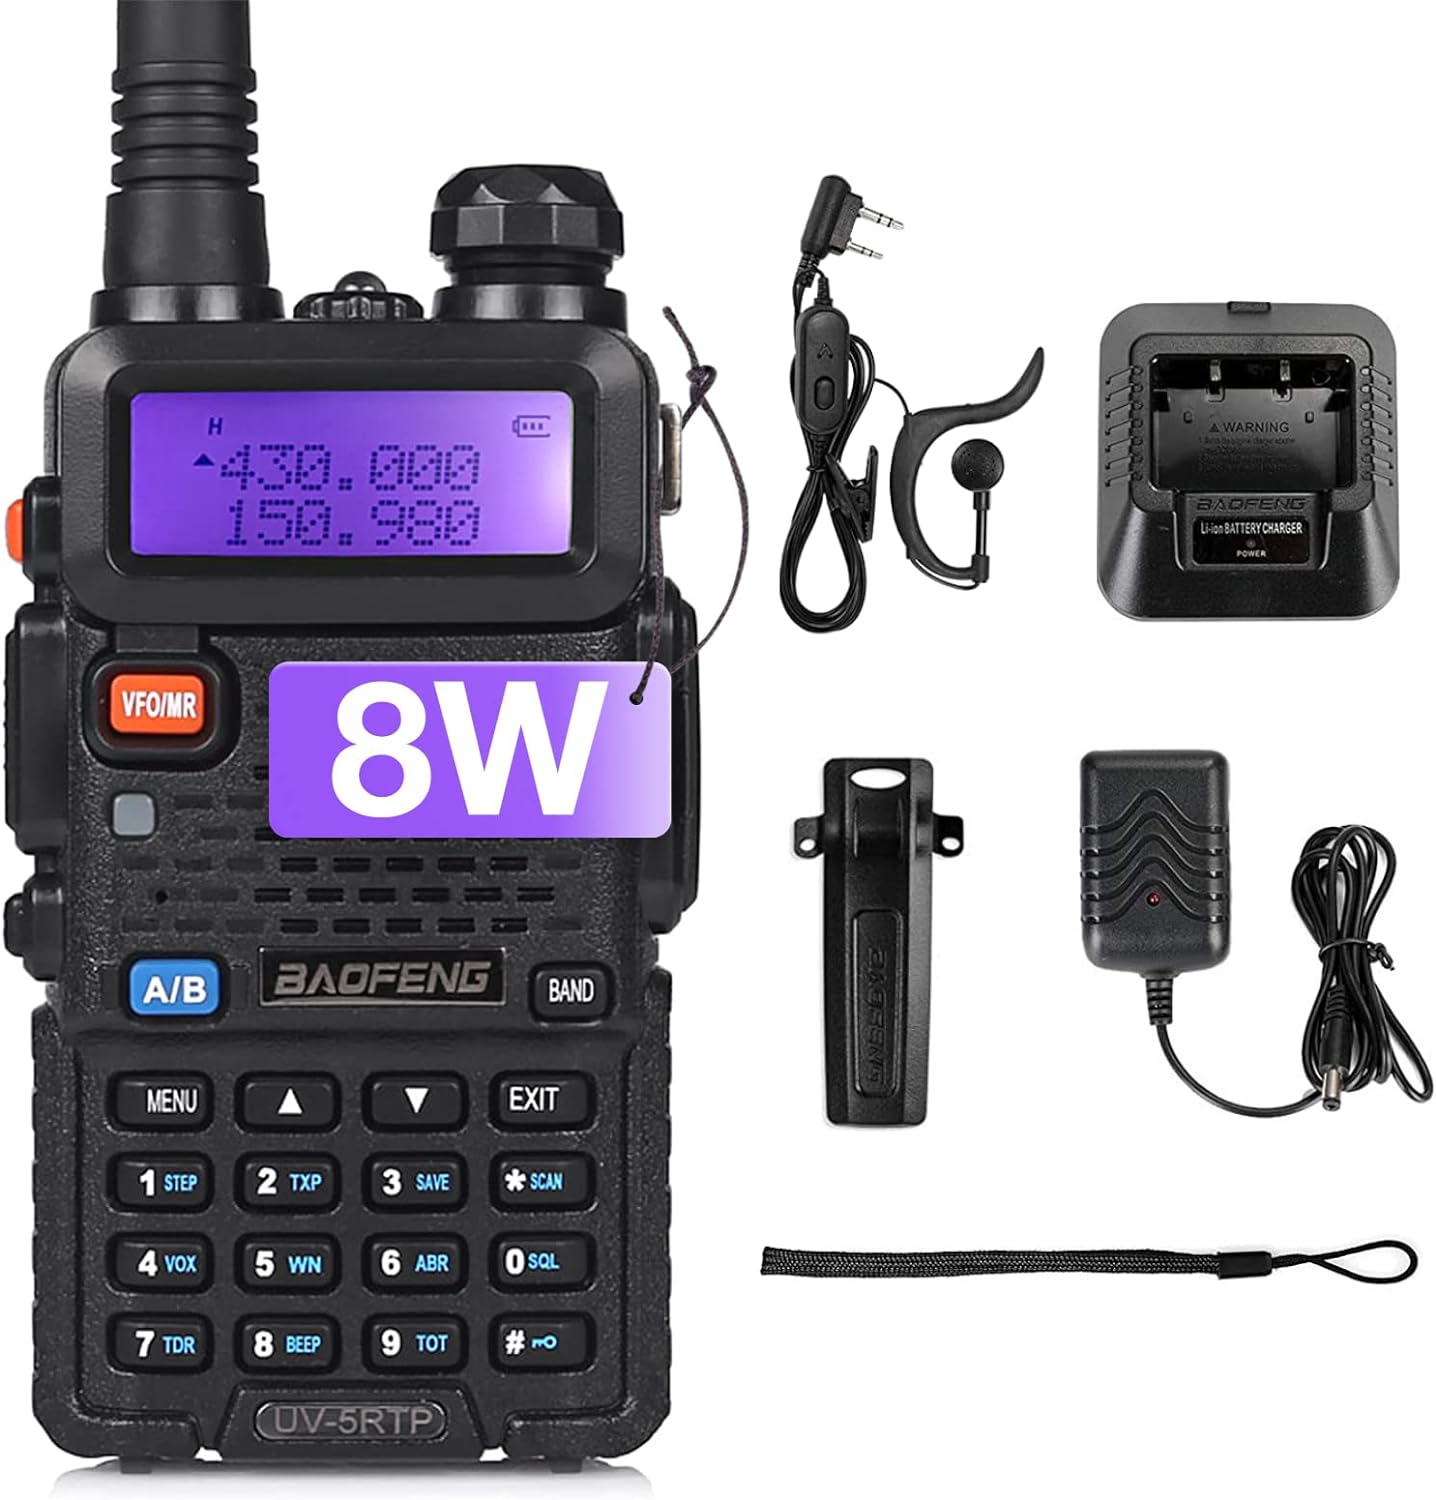 BAOFENG UV-5RTP 8 Watts Dual Band Two Way Radio, High Power Ham Radio Handheld with Earpiece, Black